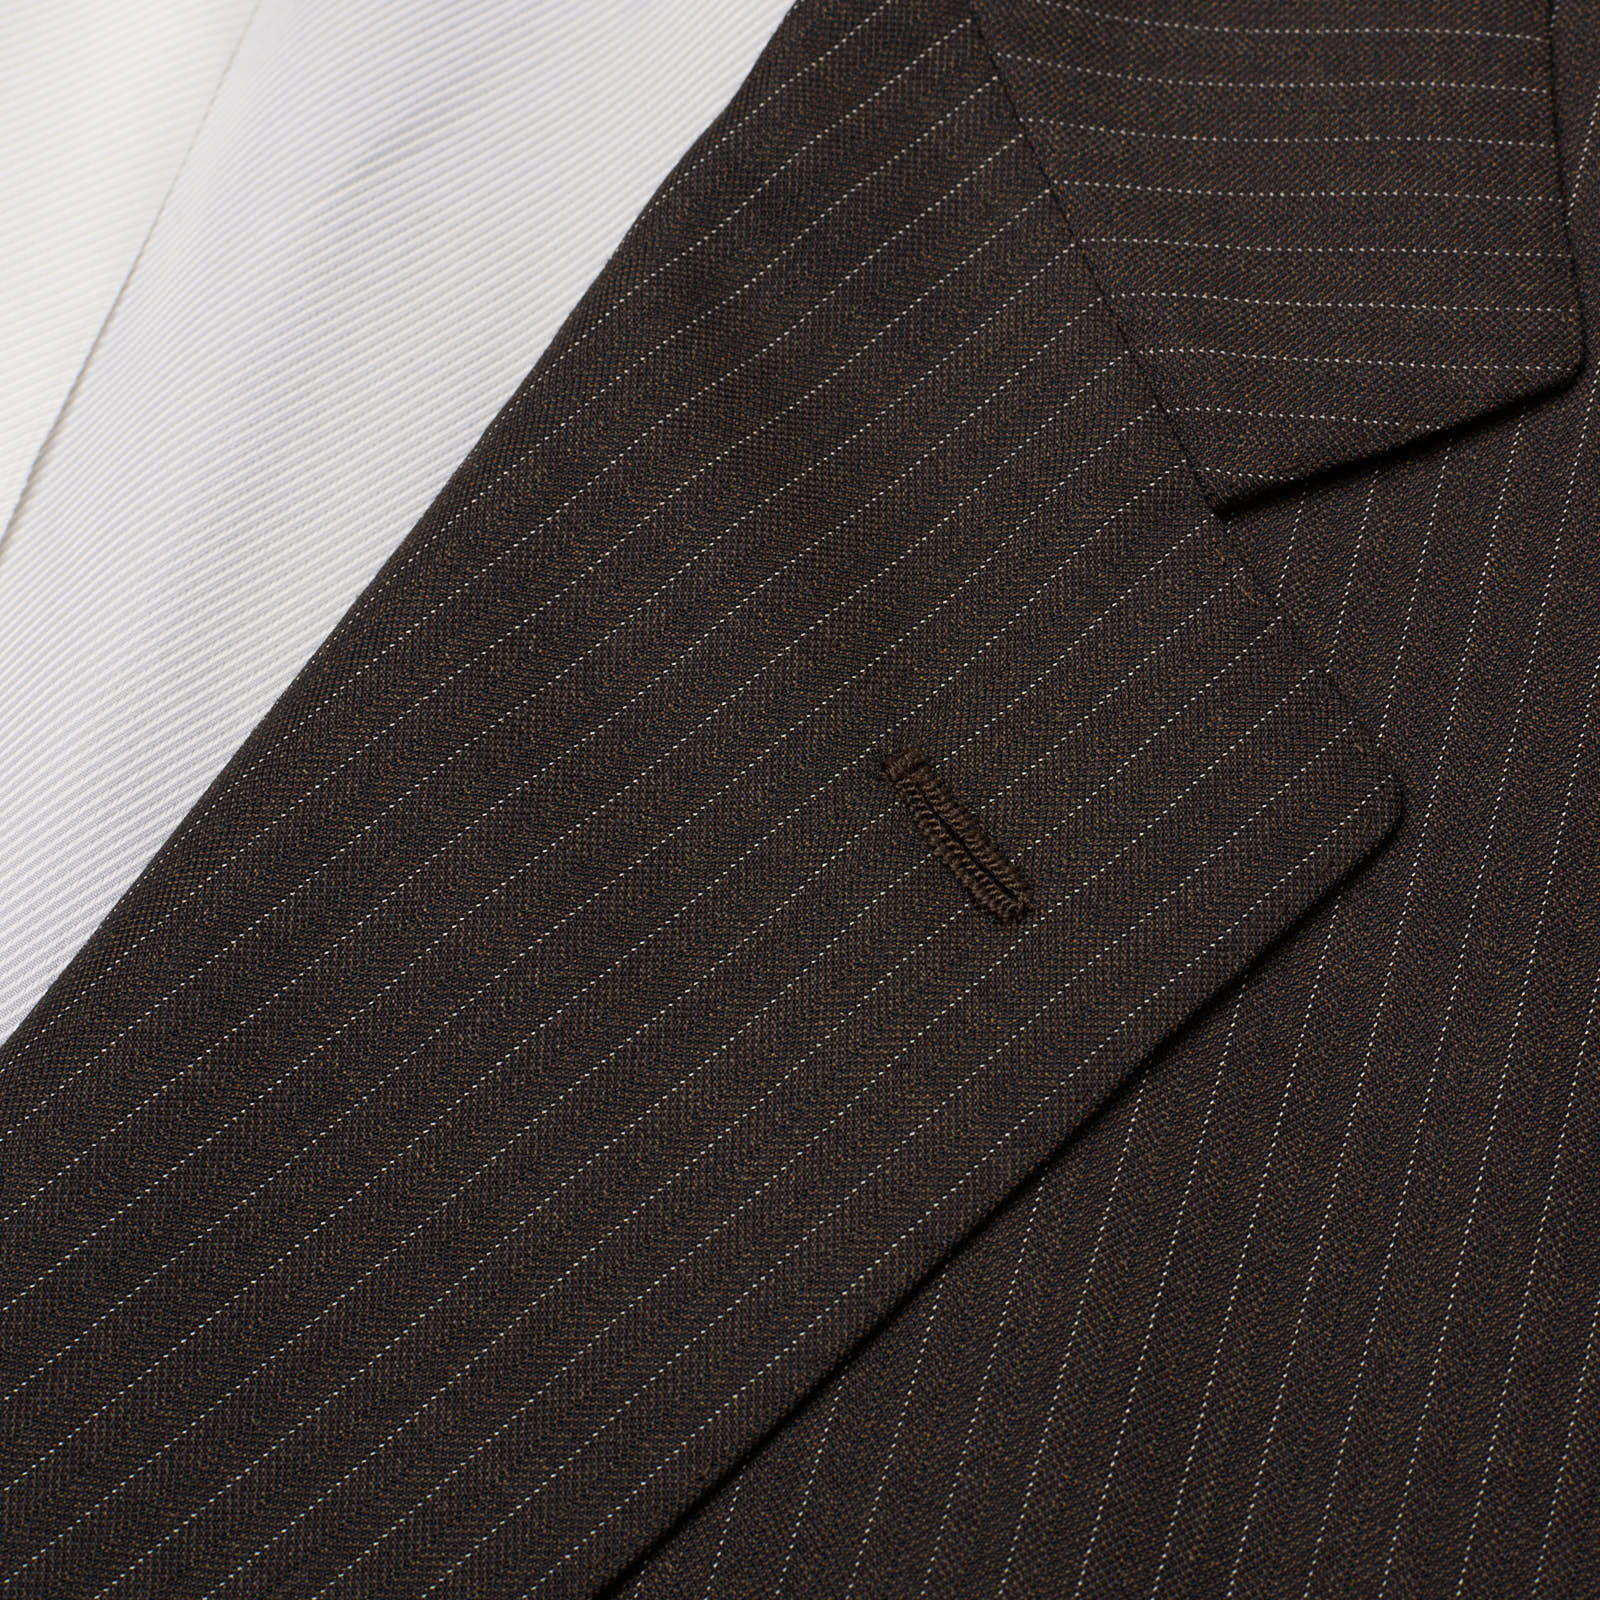 SARTORIA PARTENOPEA for VANNUCCI Brown Super 130's Handmade Suit EU 56 US 44